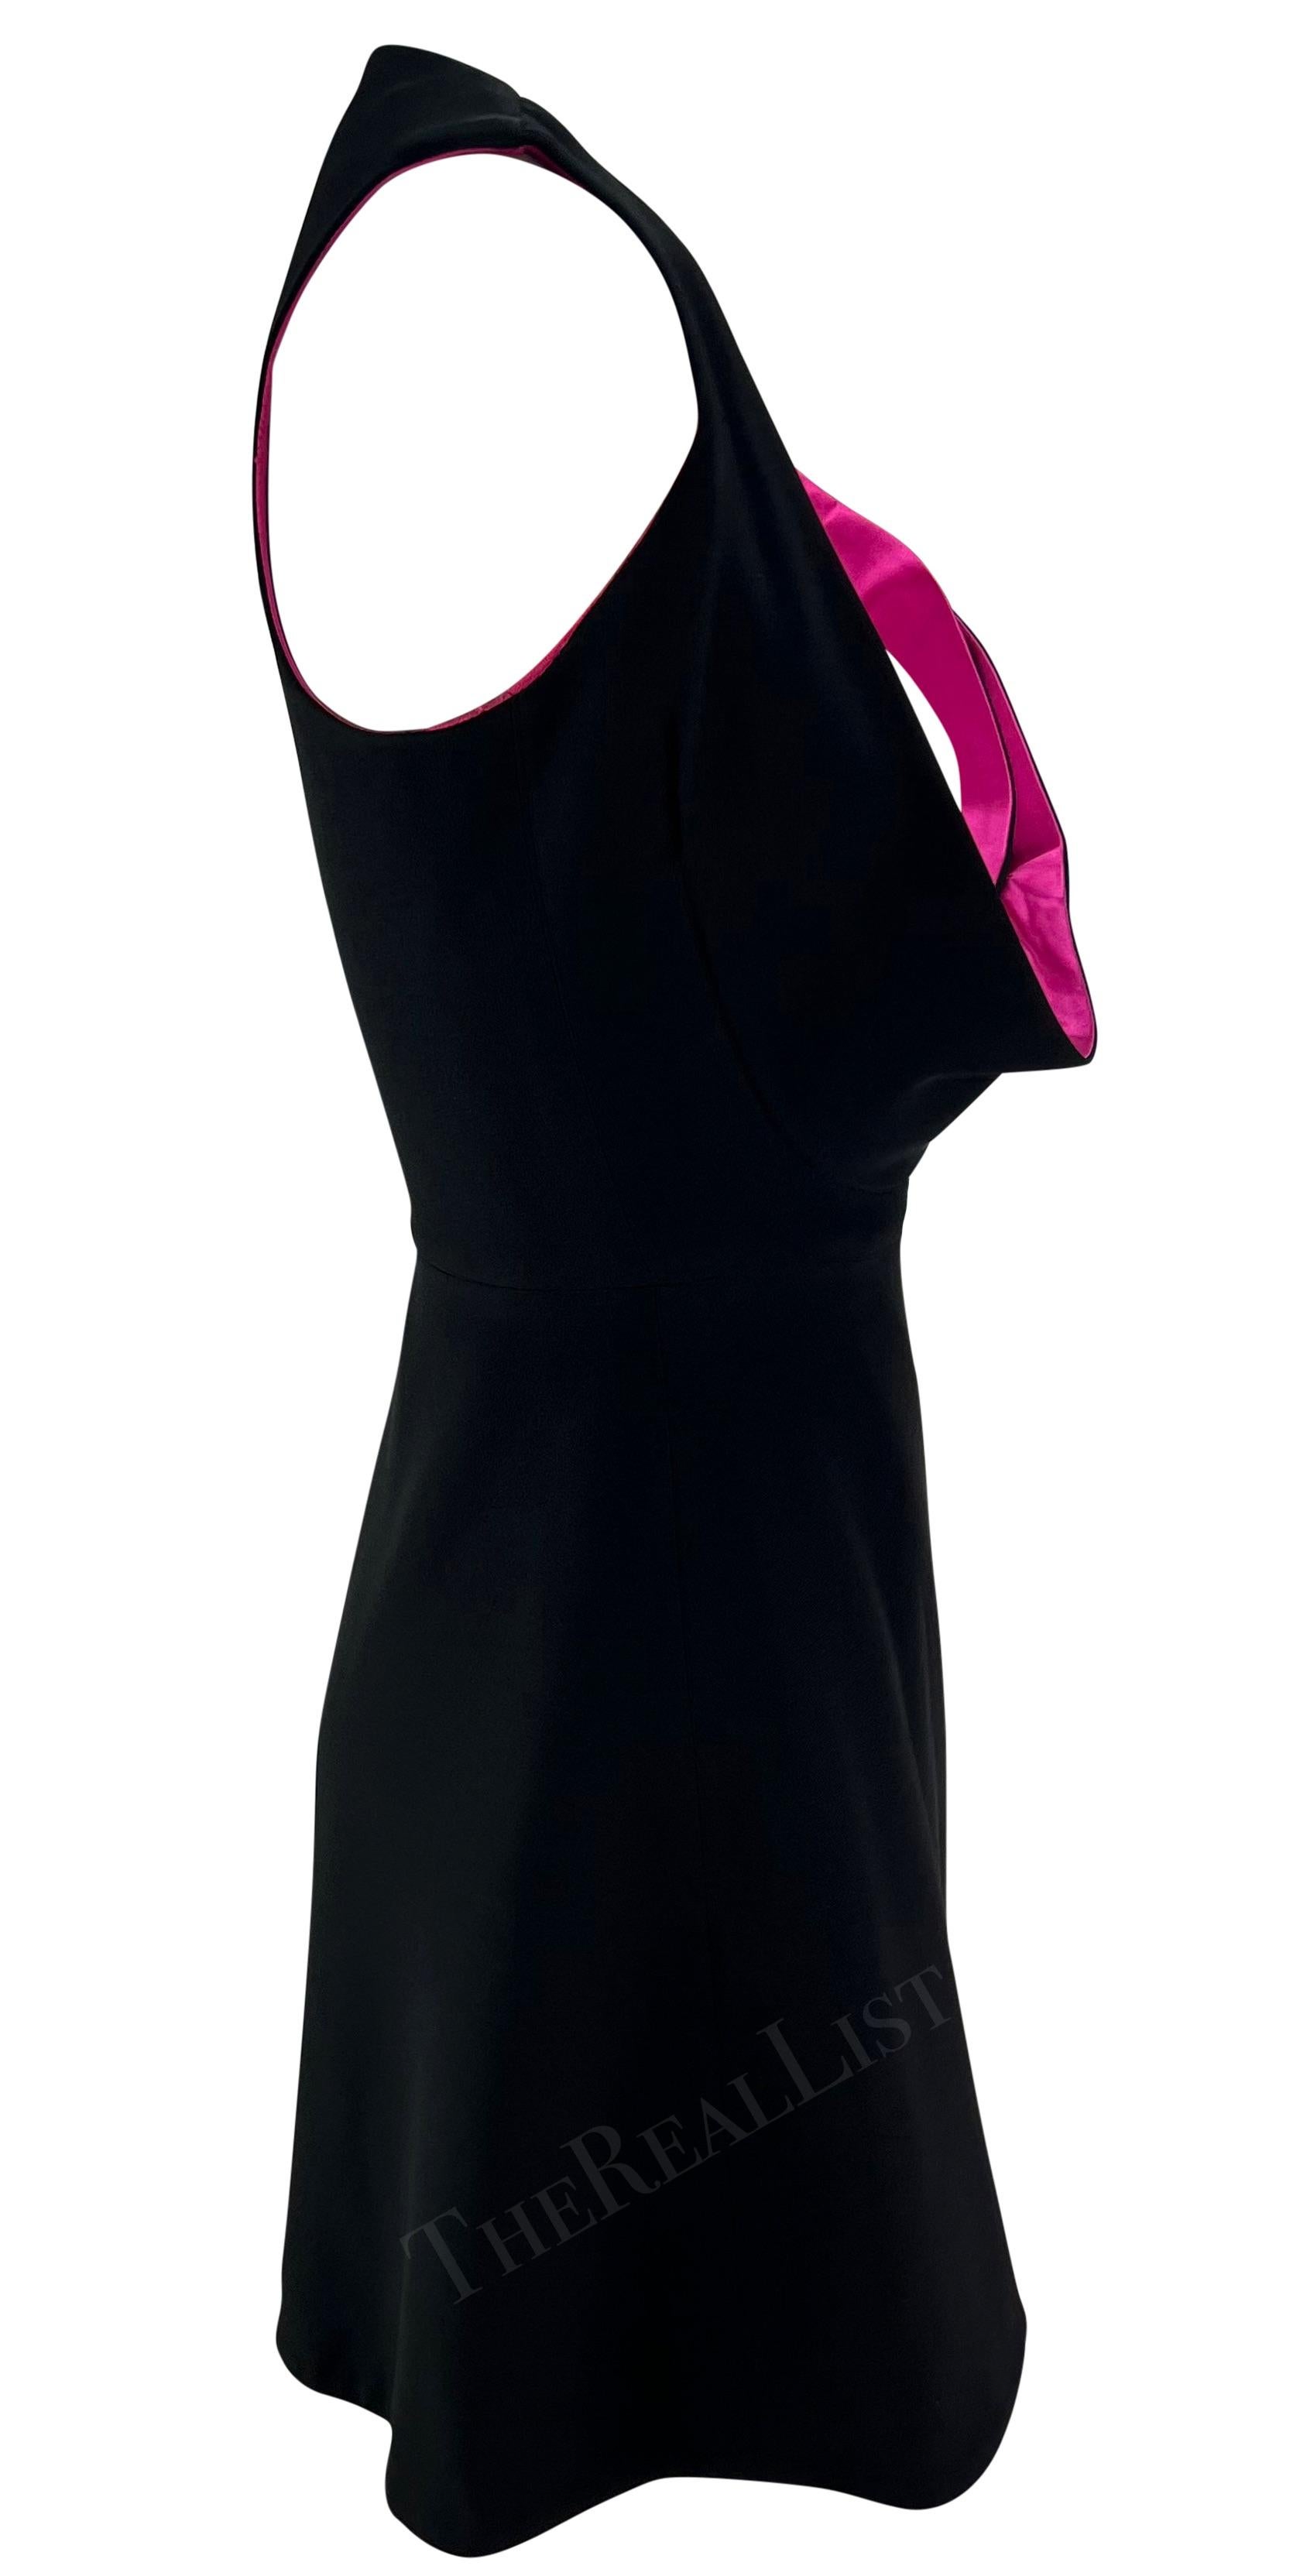 F/W 1991 Giani Versace Runway Open Bust Black Hot Pink Wrap Mini Dress For Sale 4